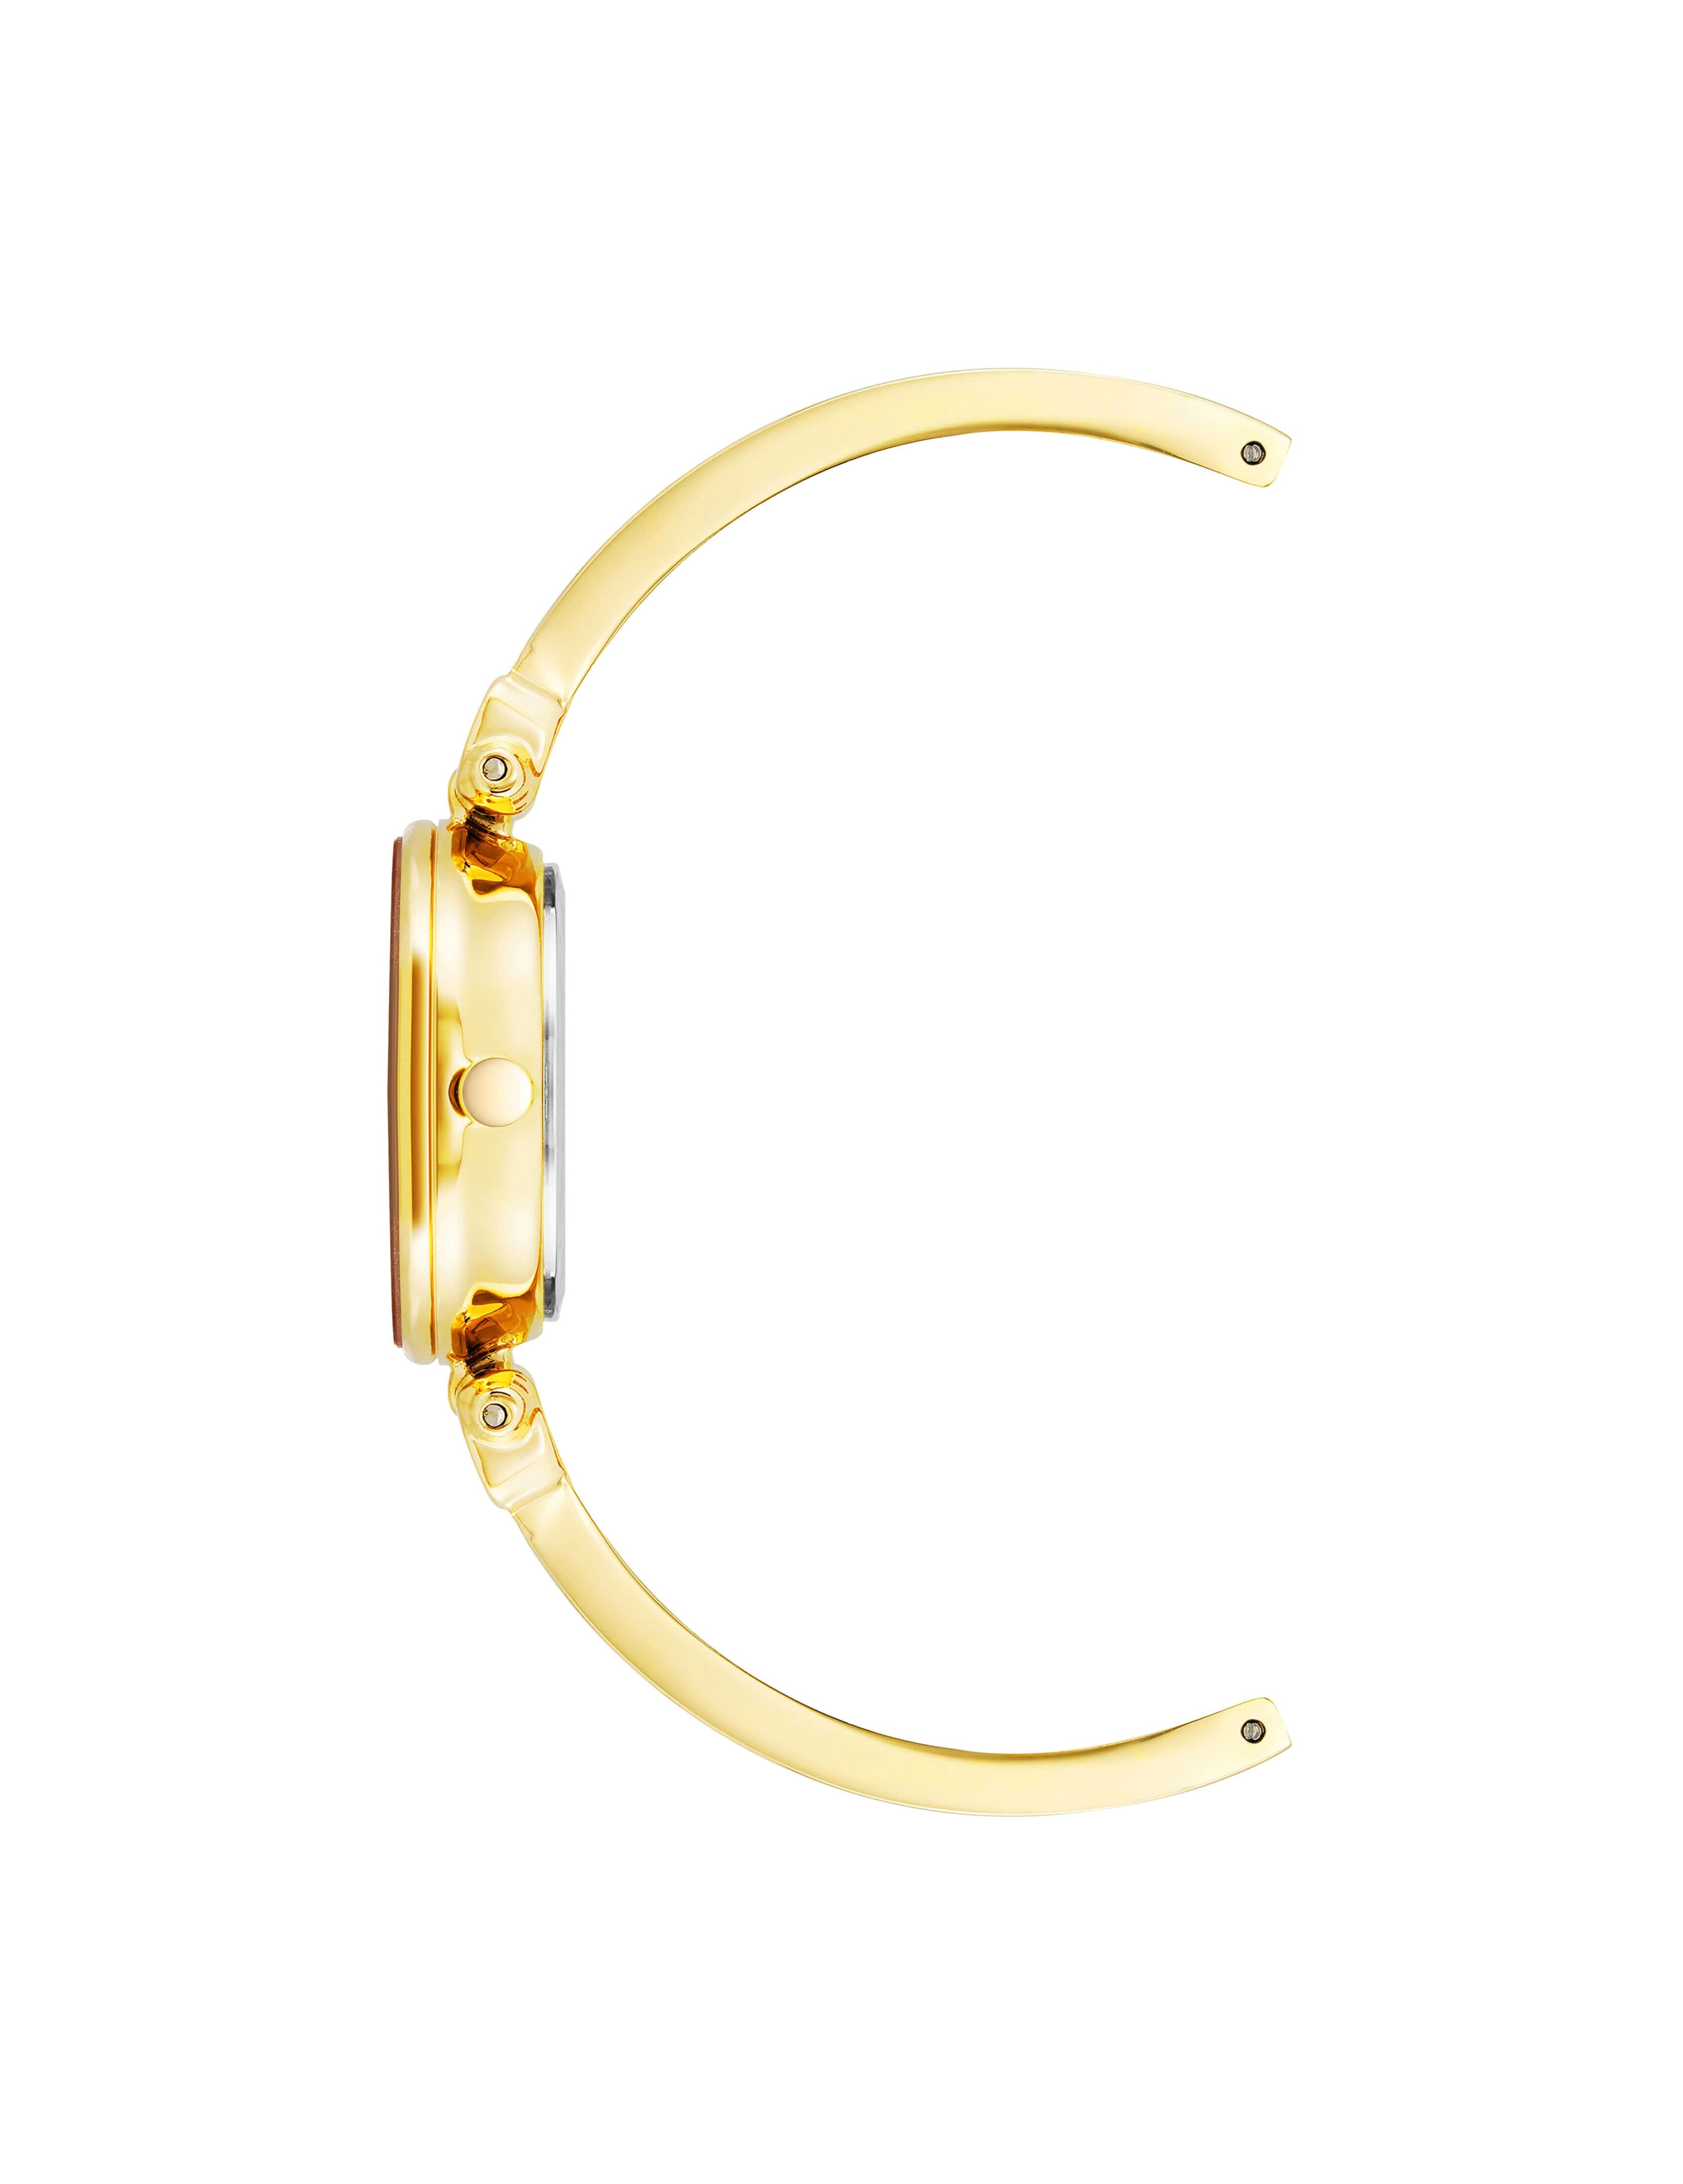 Anne Klein Women's Diamond Accent Bangle Watch in Red/Gold-Tone